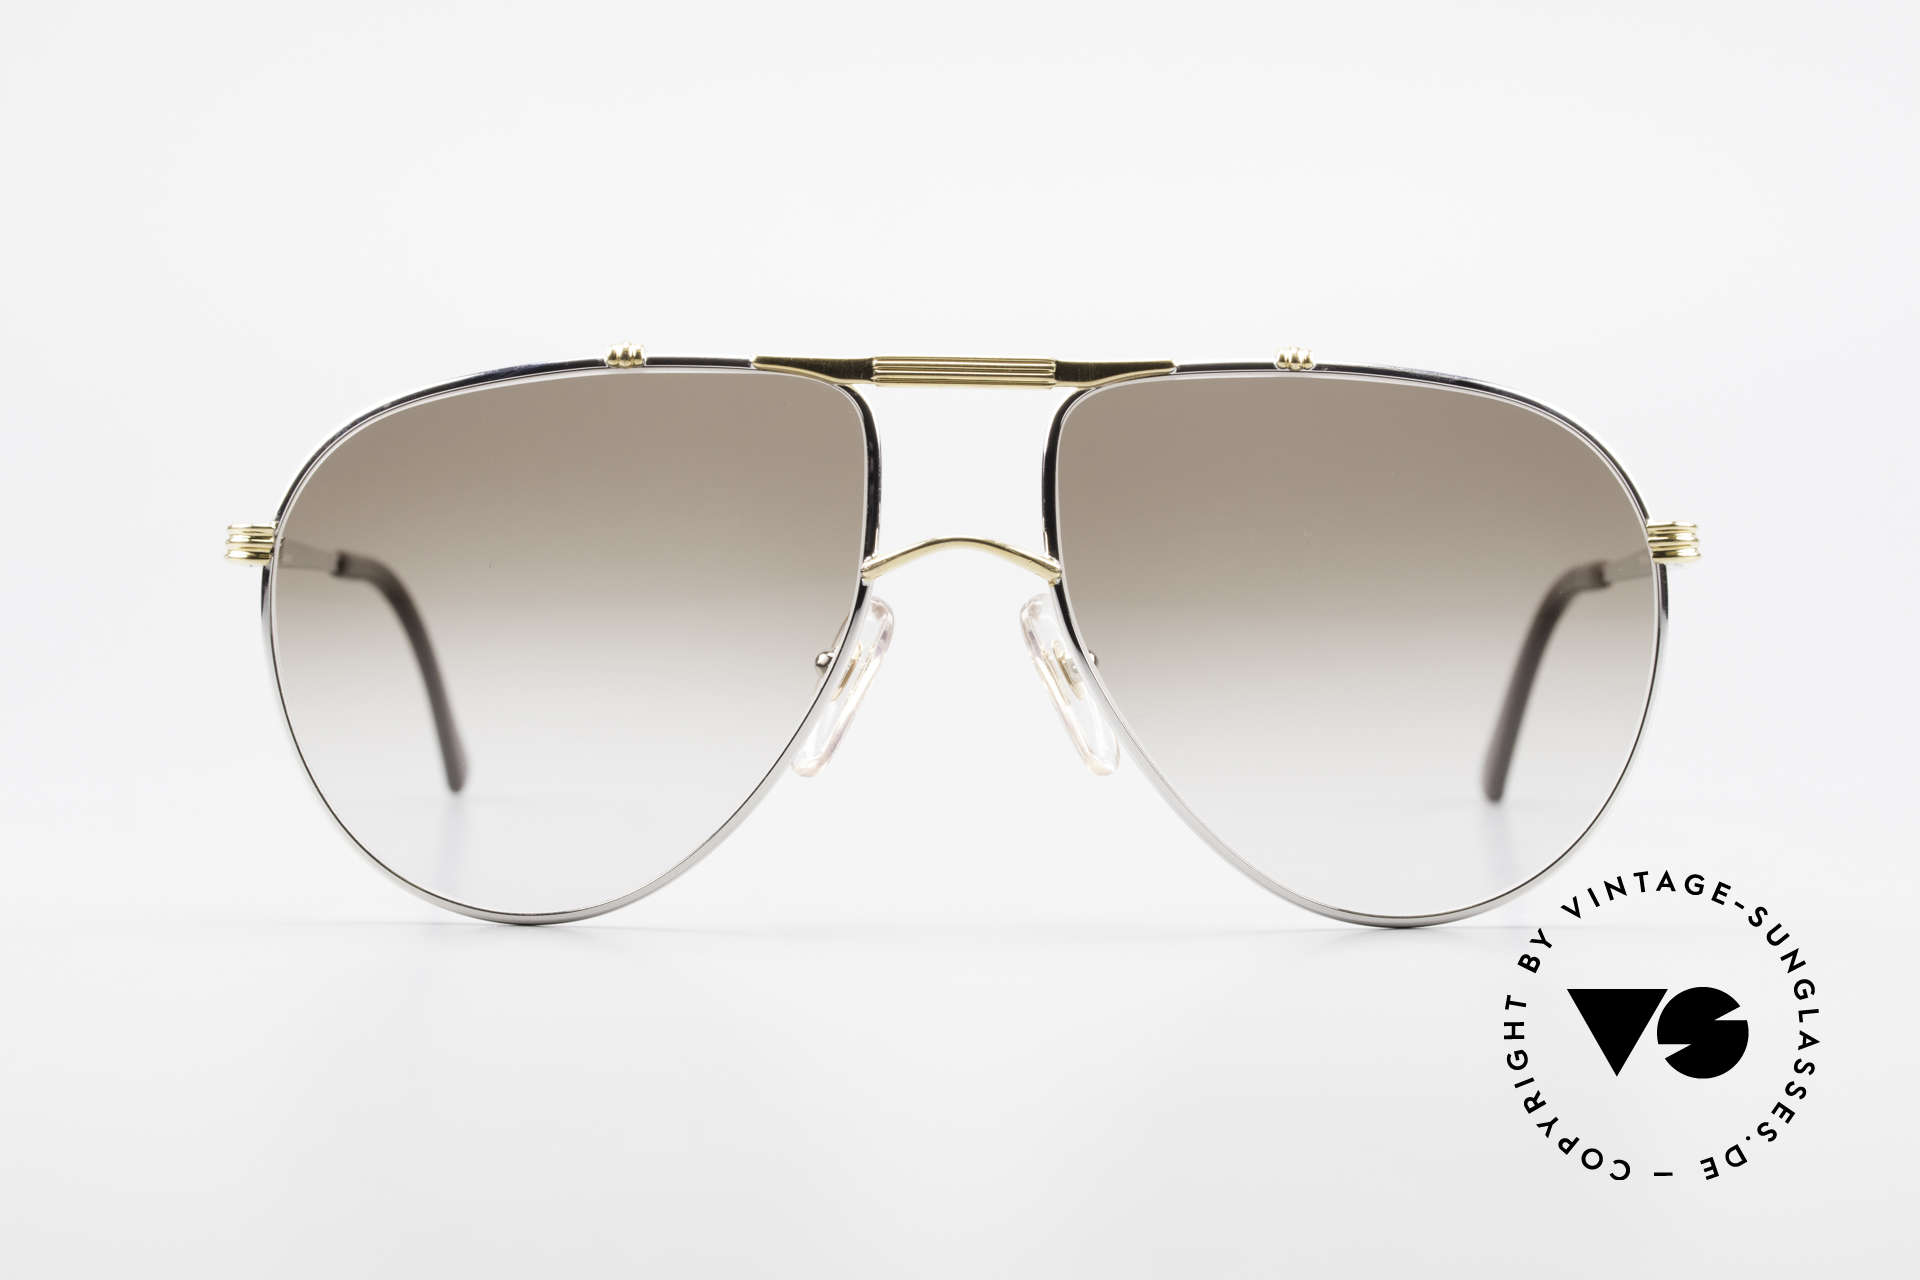 Sunglasses Christian Dior 2248 Large 80's Aviator Sunglasses